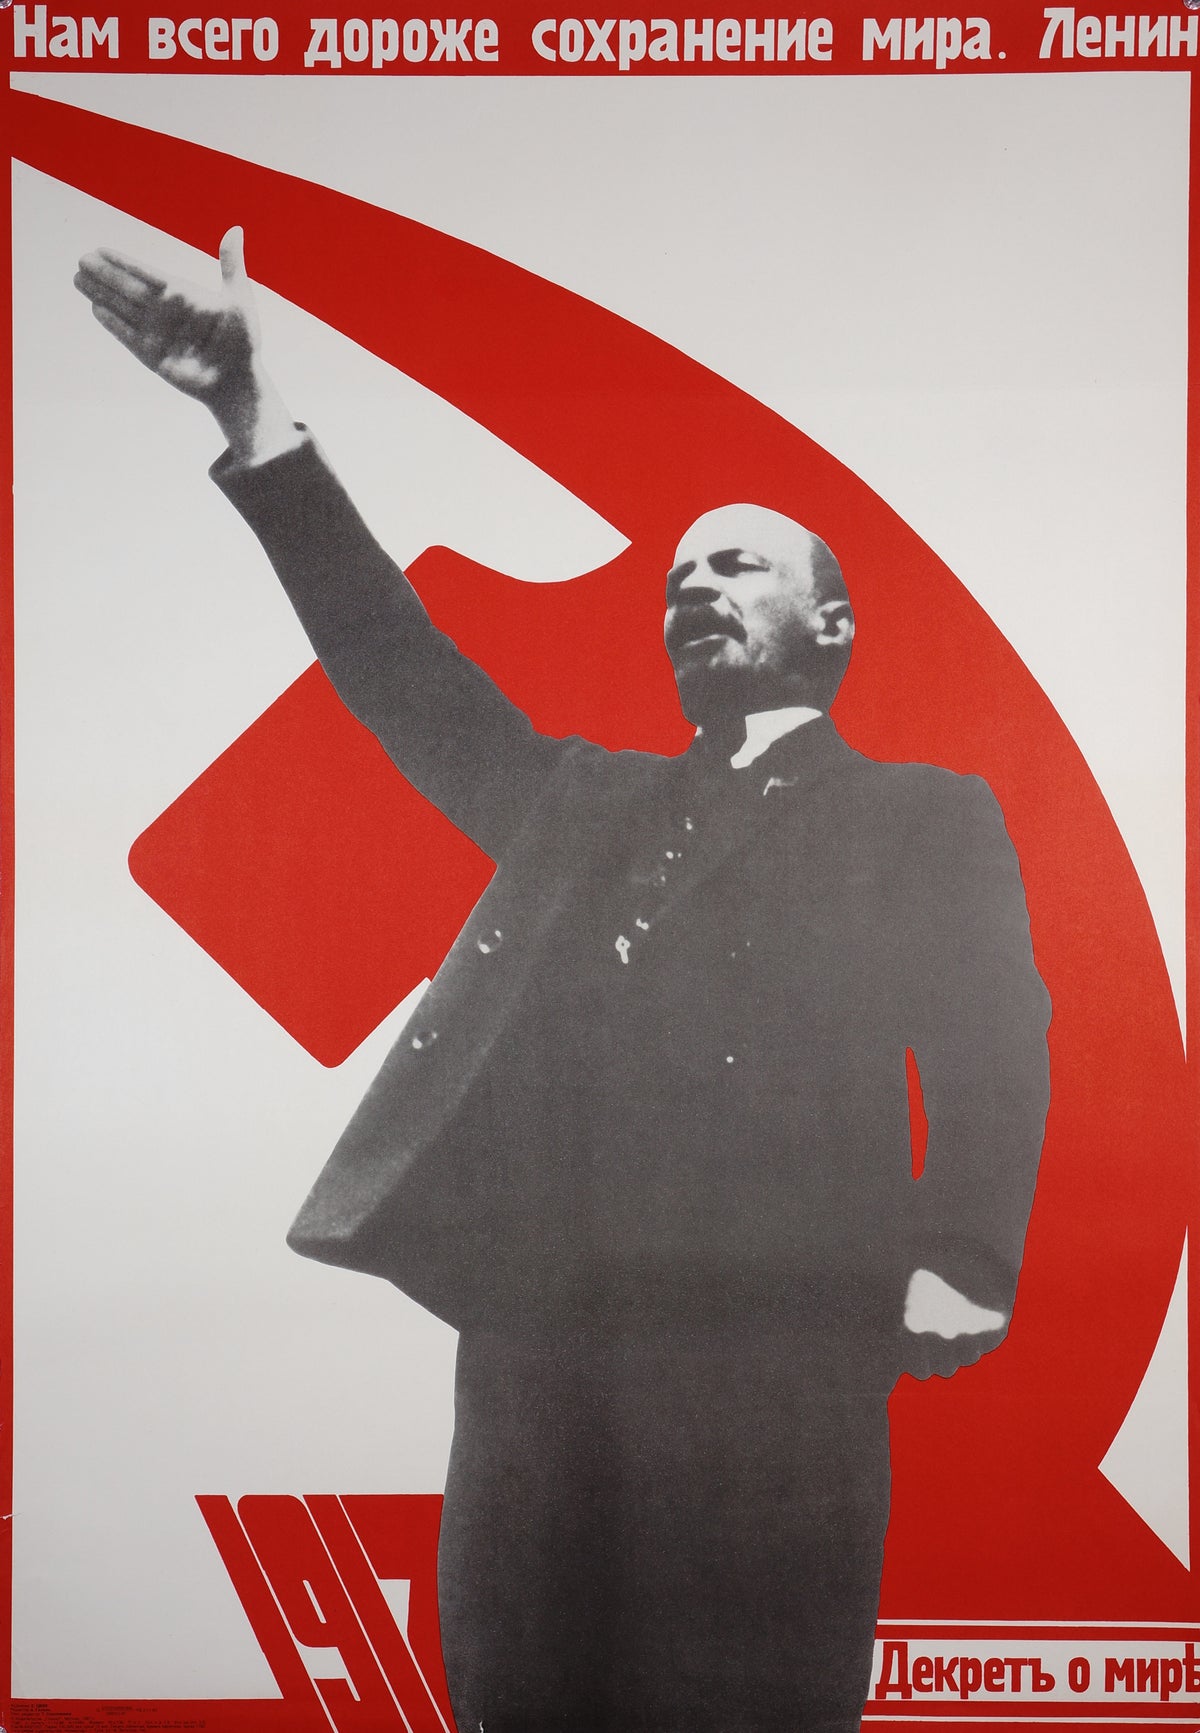 Lenin- Peace is most important - Authentic Vintage Poster